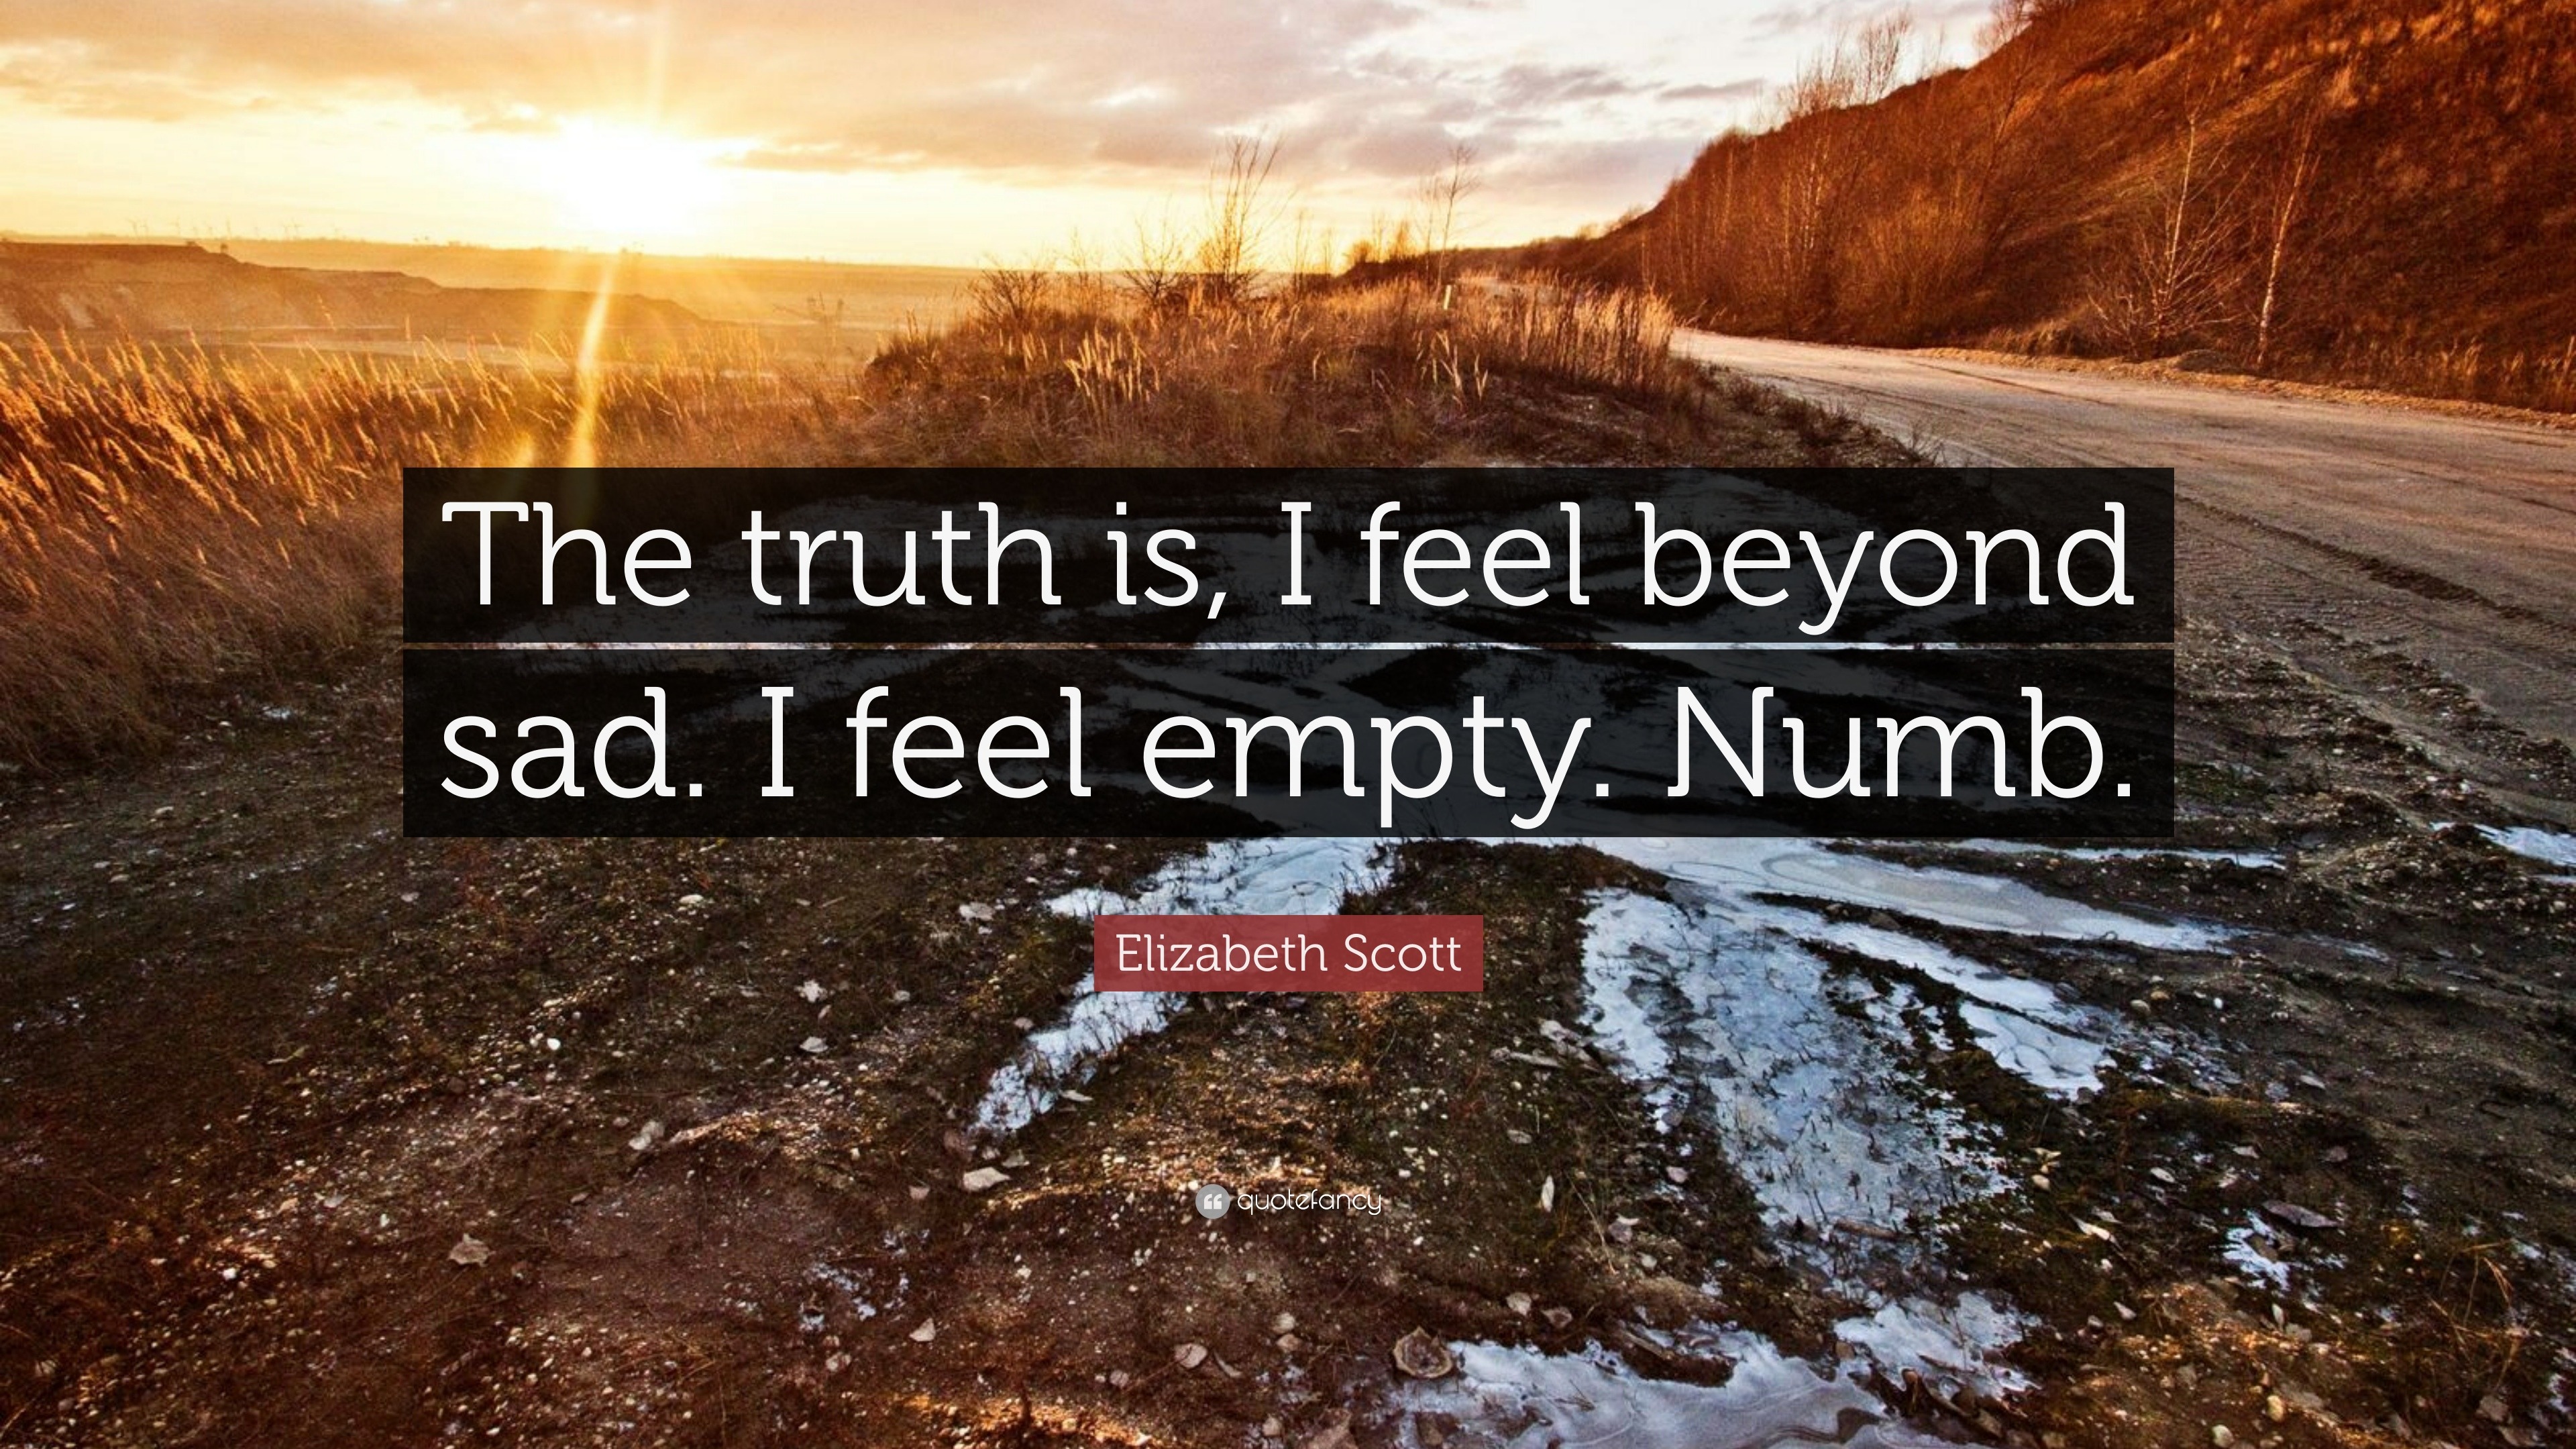 Elizabeth Scott Quote: “The truth is, I feel beyond sad. I feel empty